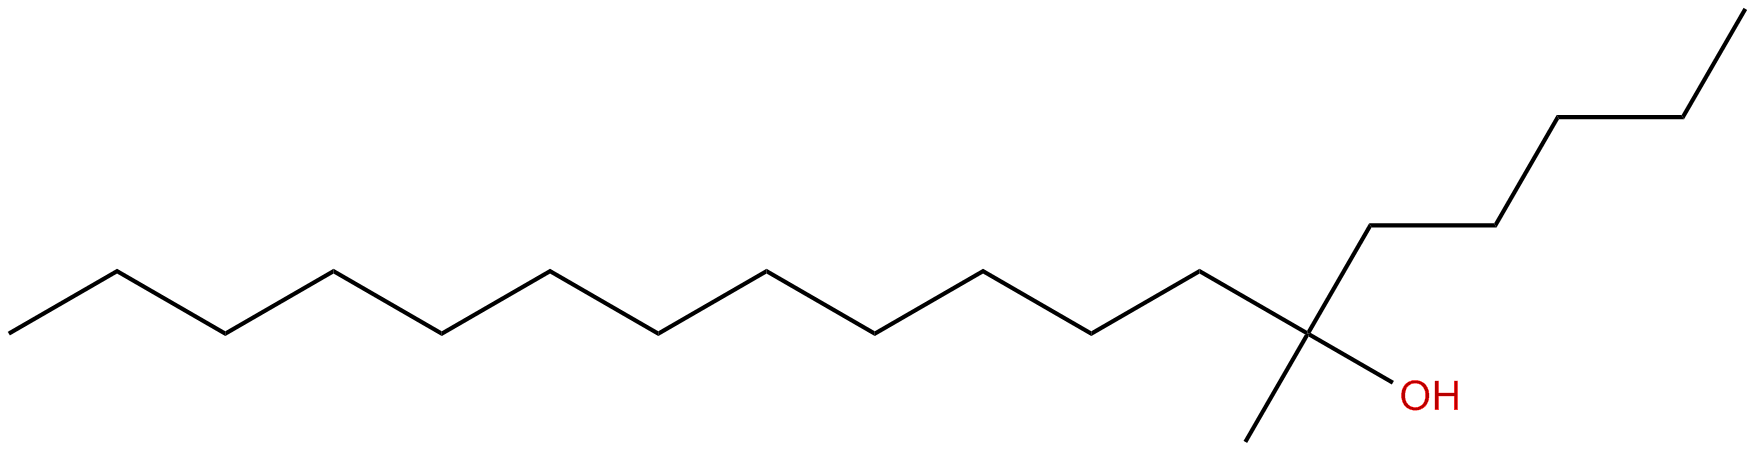 Image of 6-methyl-6-octadecanol